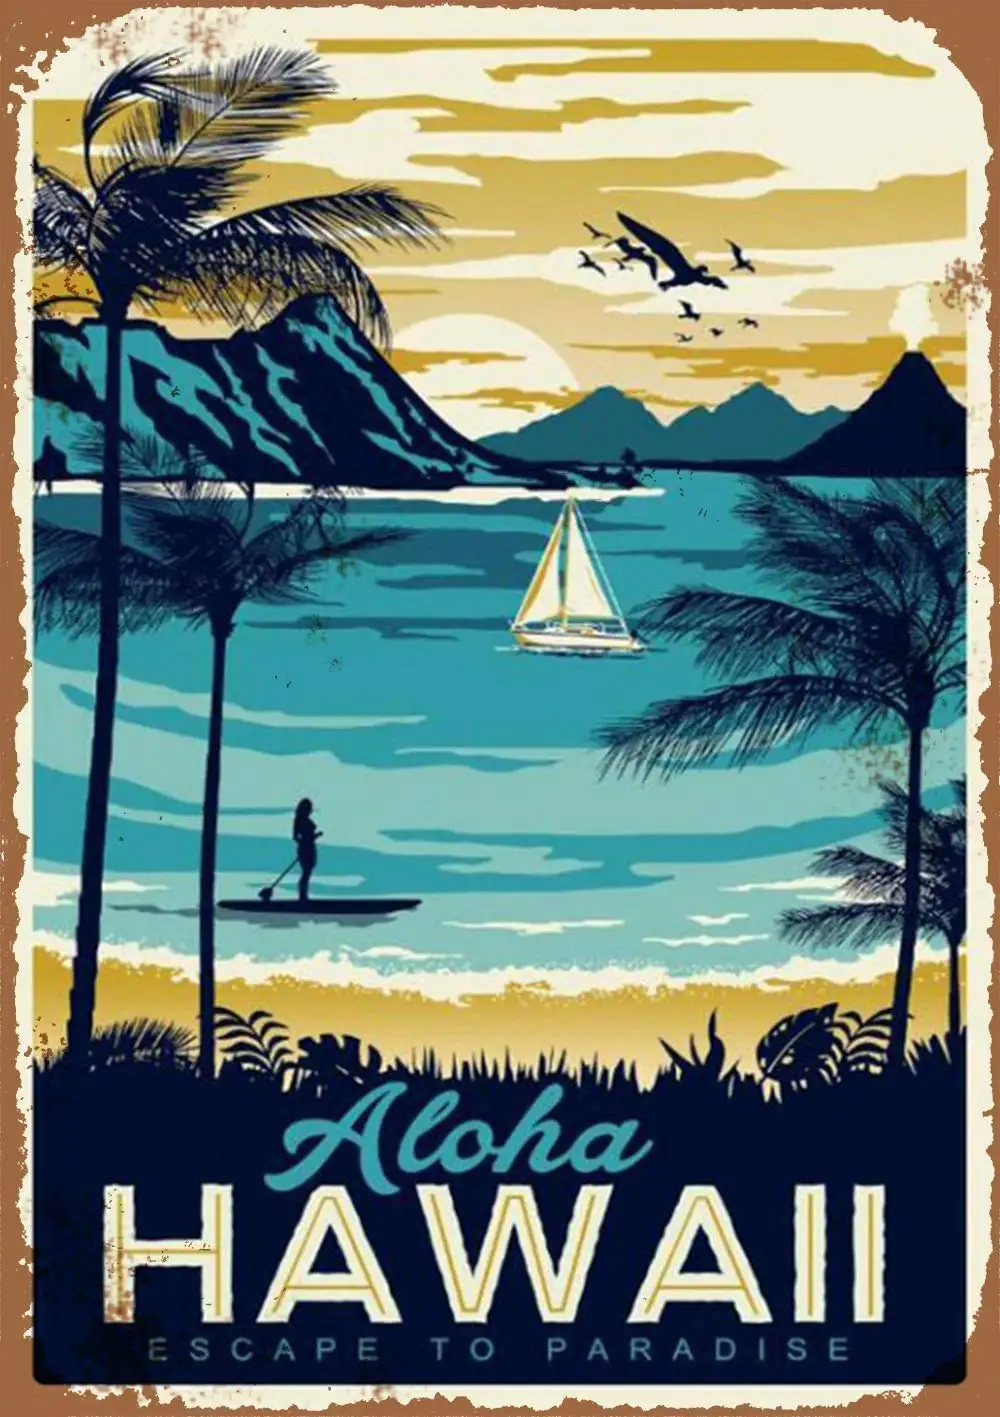 

Aloha Hawaii Seaside Beach Bar Plaque Tin Sheet Beach Bar Cafe Pub Wall Metal Sign Decoration 12x8 inch